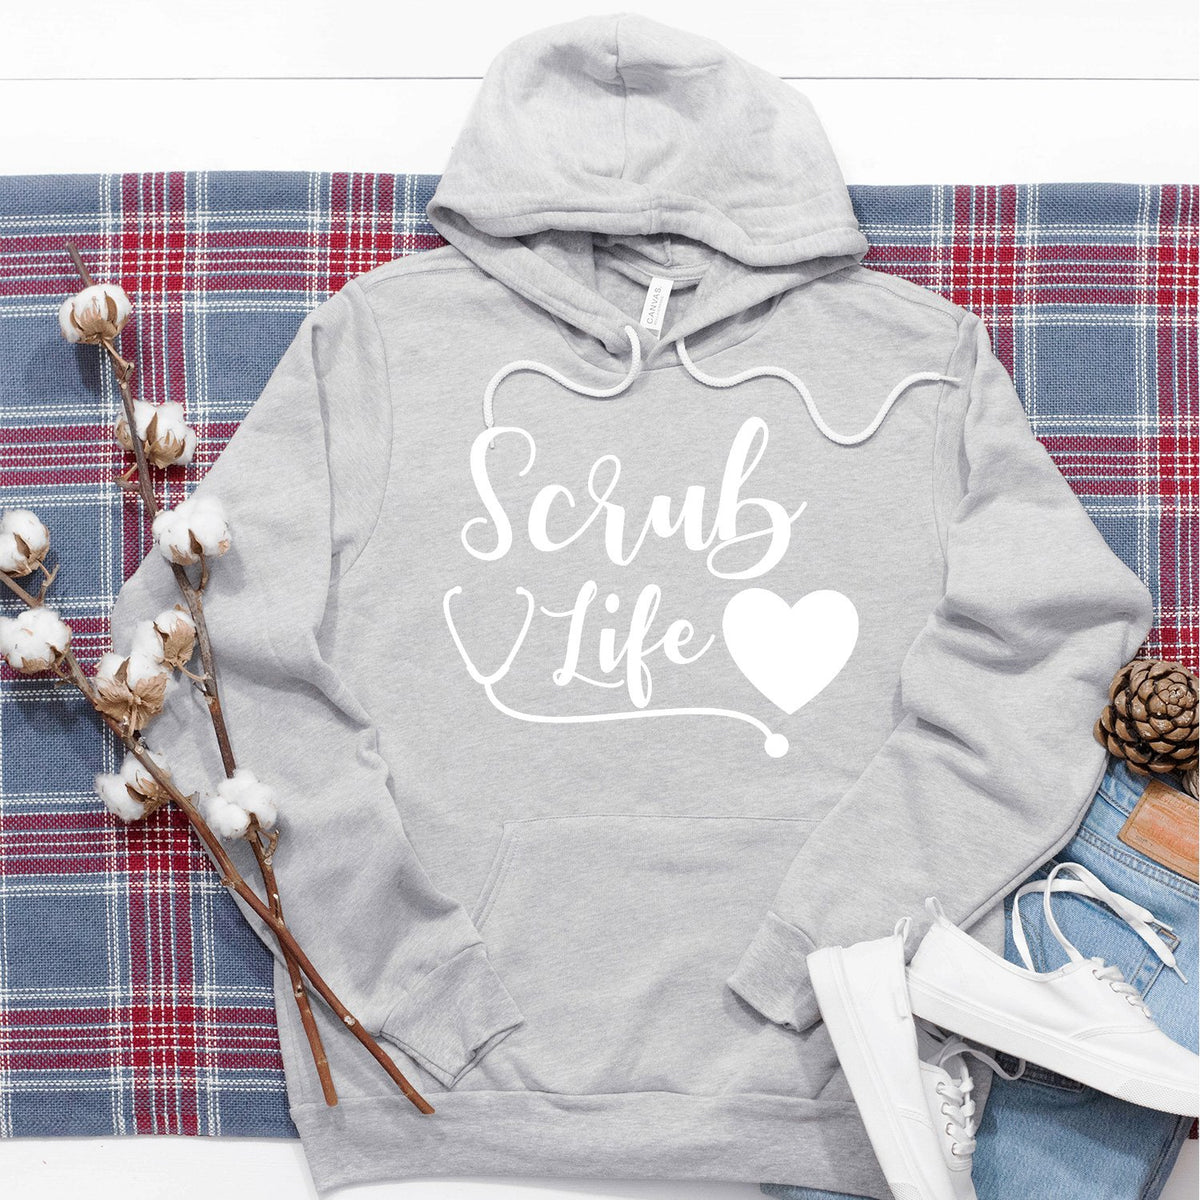 Scrub Life with Stethoscope and Heart - Hoodie Sweatshirt